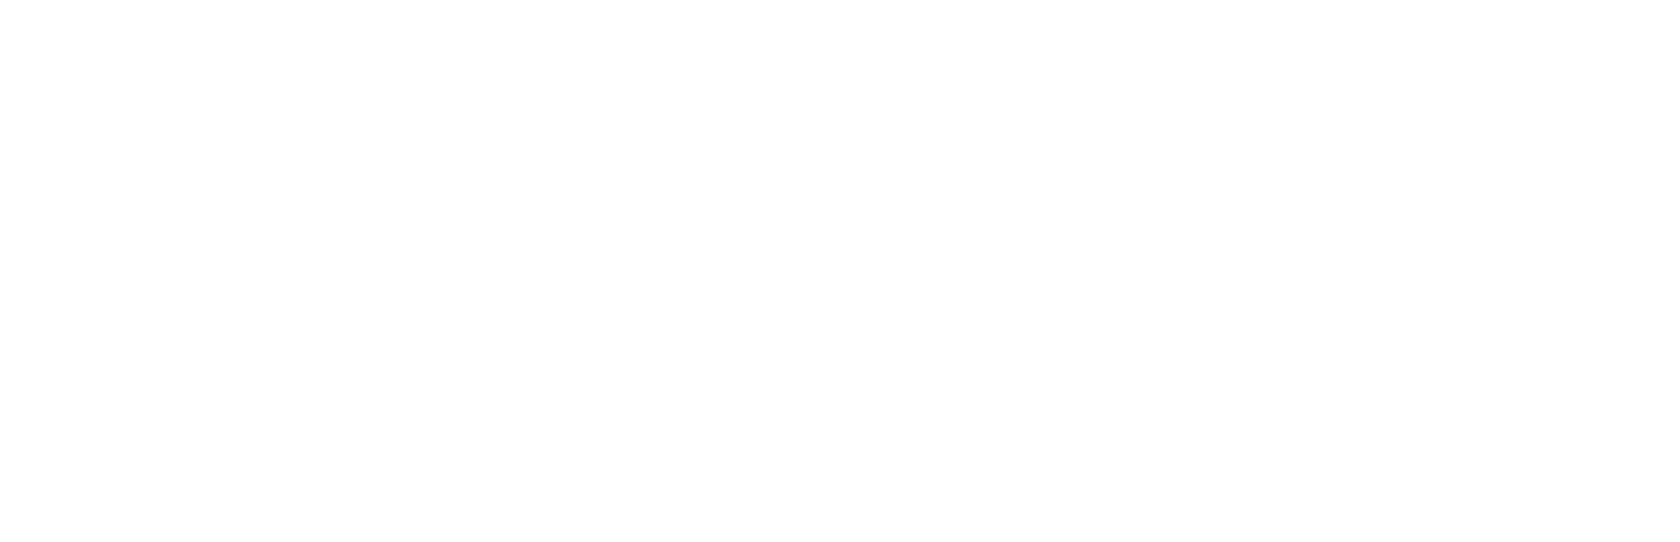 UnionX создание логотипа и нейминга